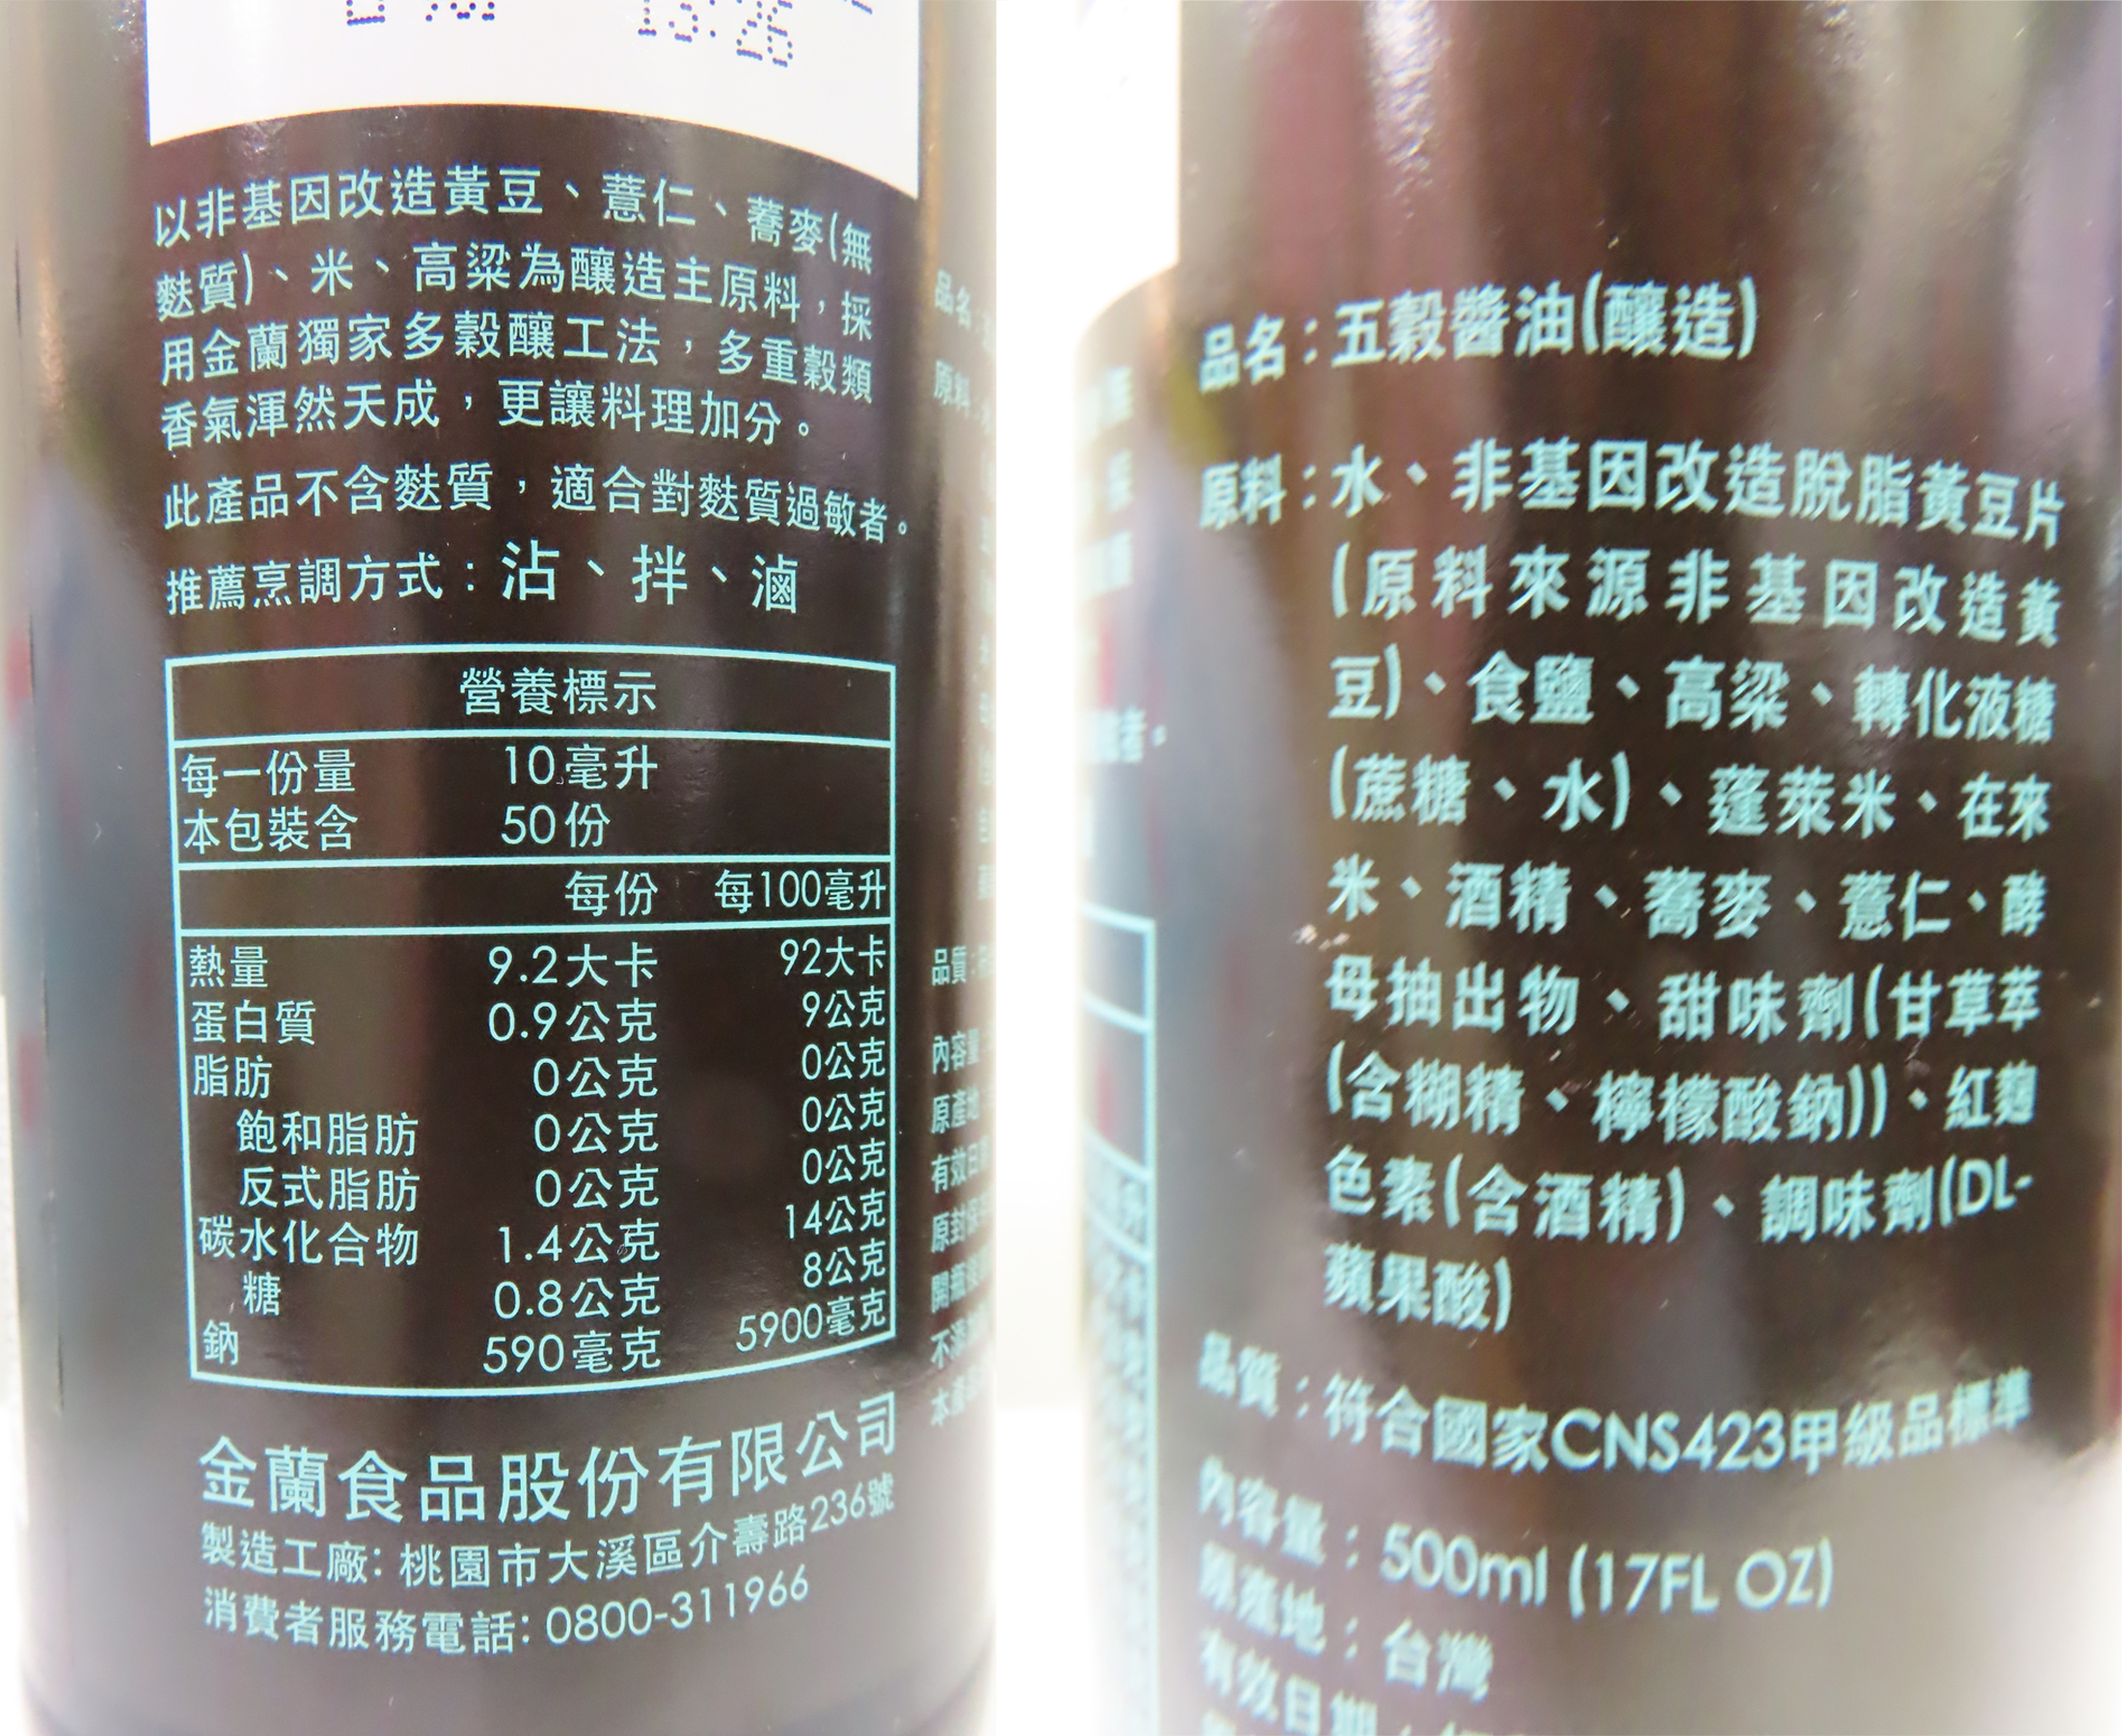 Image Multi-grain Soy Sauce 金兰 - 五谷醬油 500 grams